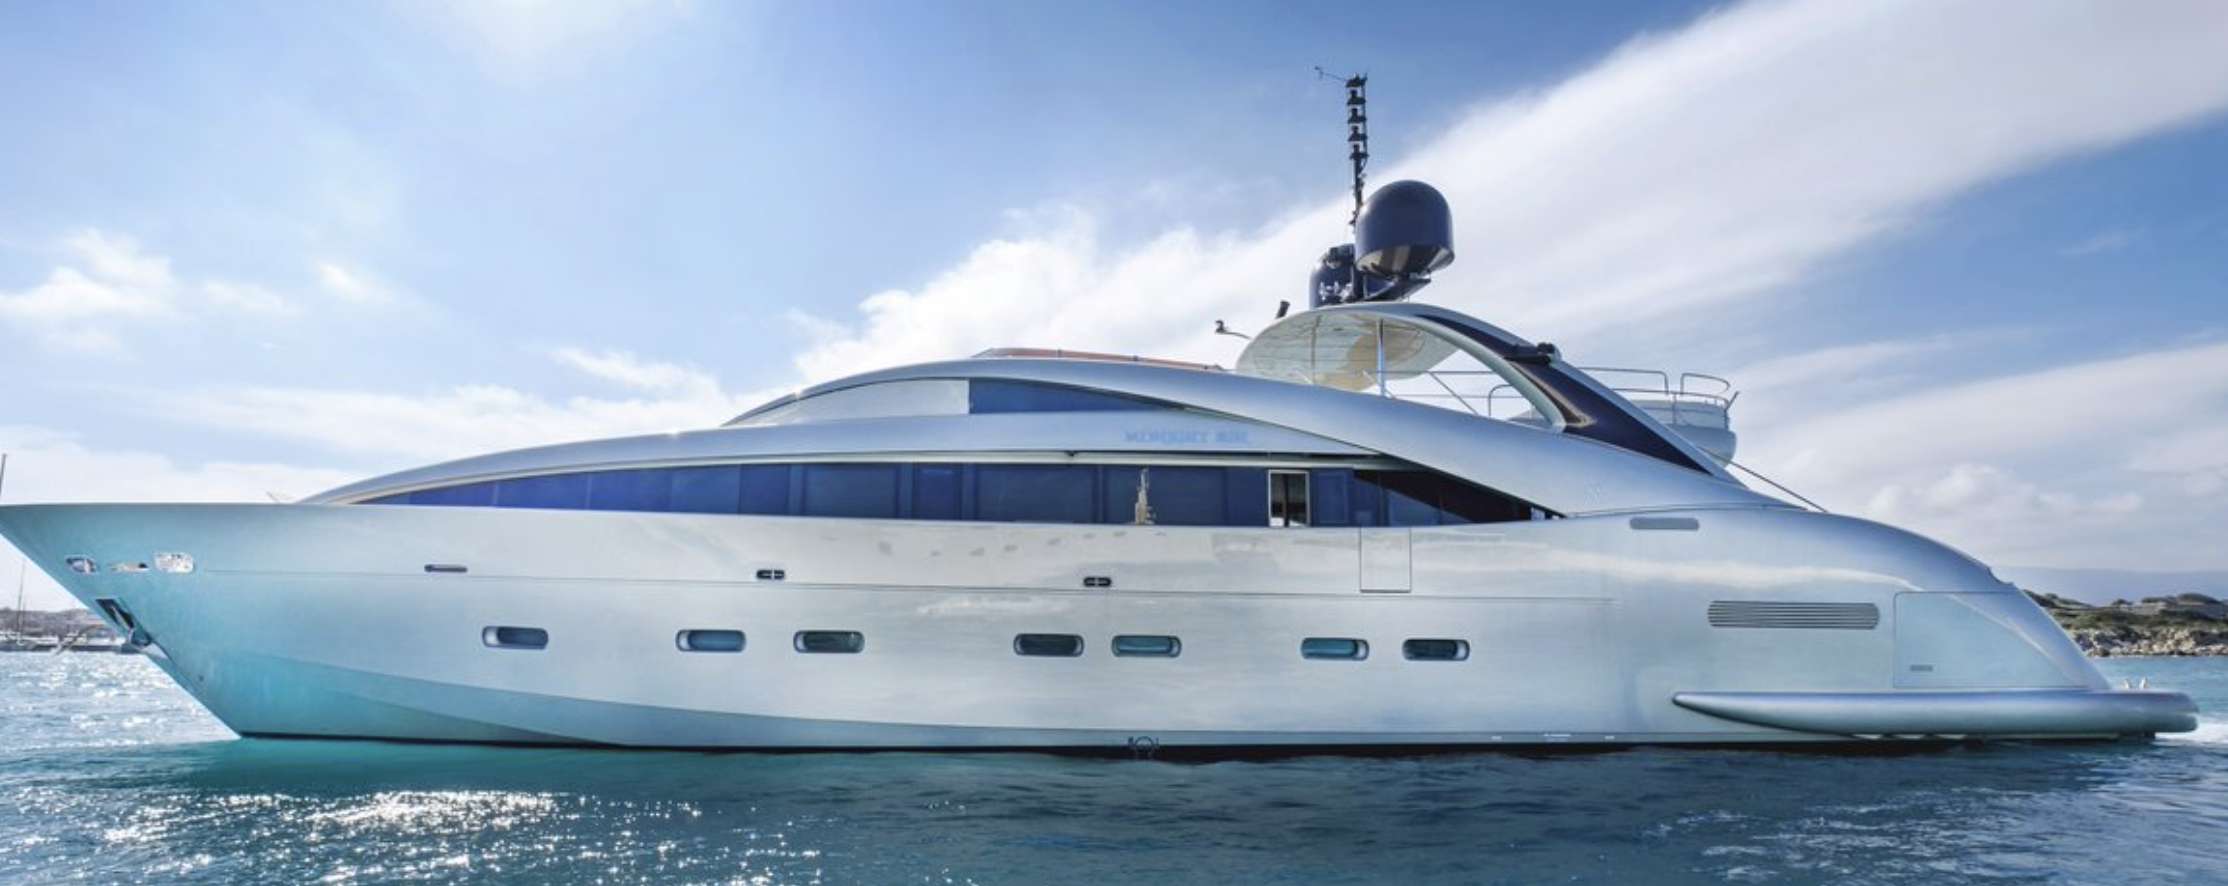 YCM 120 - Superyacht charter British Virgin Island & Boat hire in Riviera, Corsica, Sardinia, Spain, Balearics, Caribbean 4